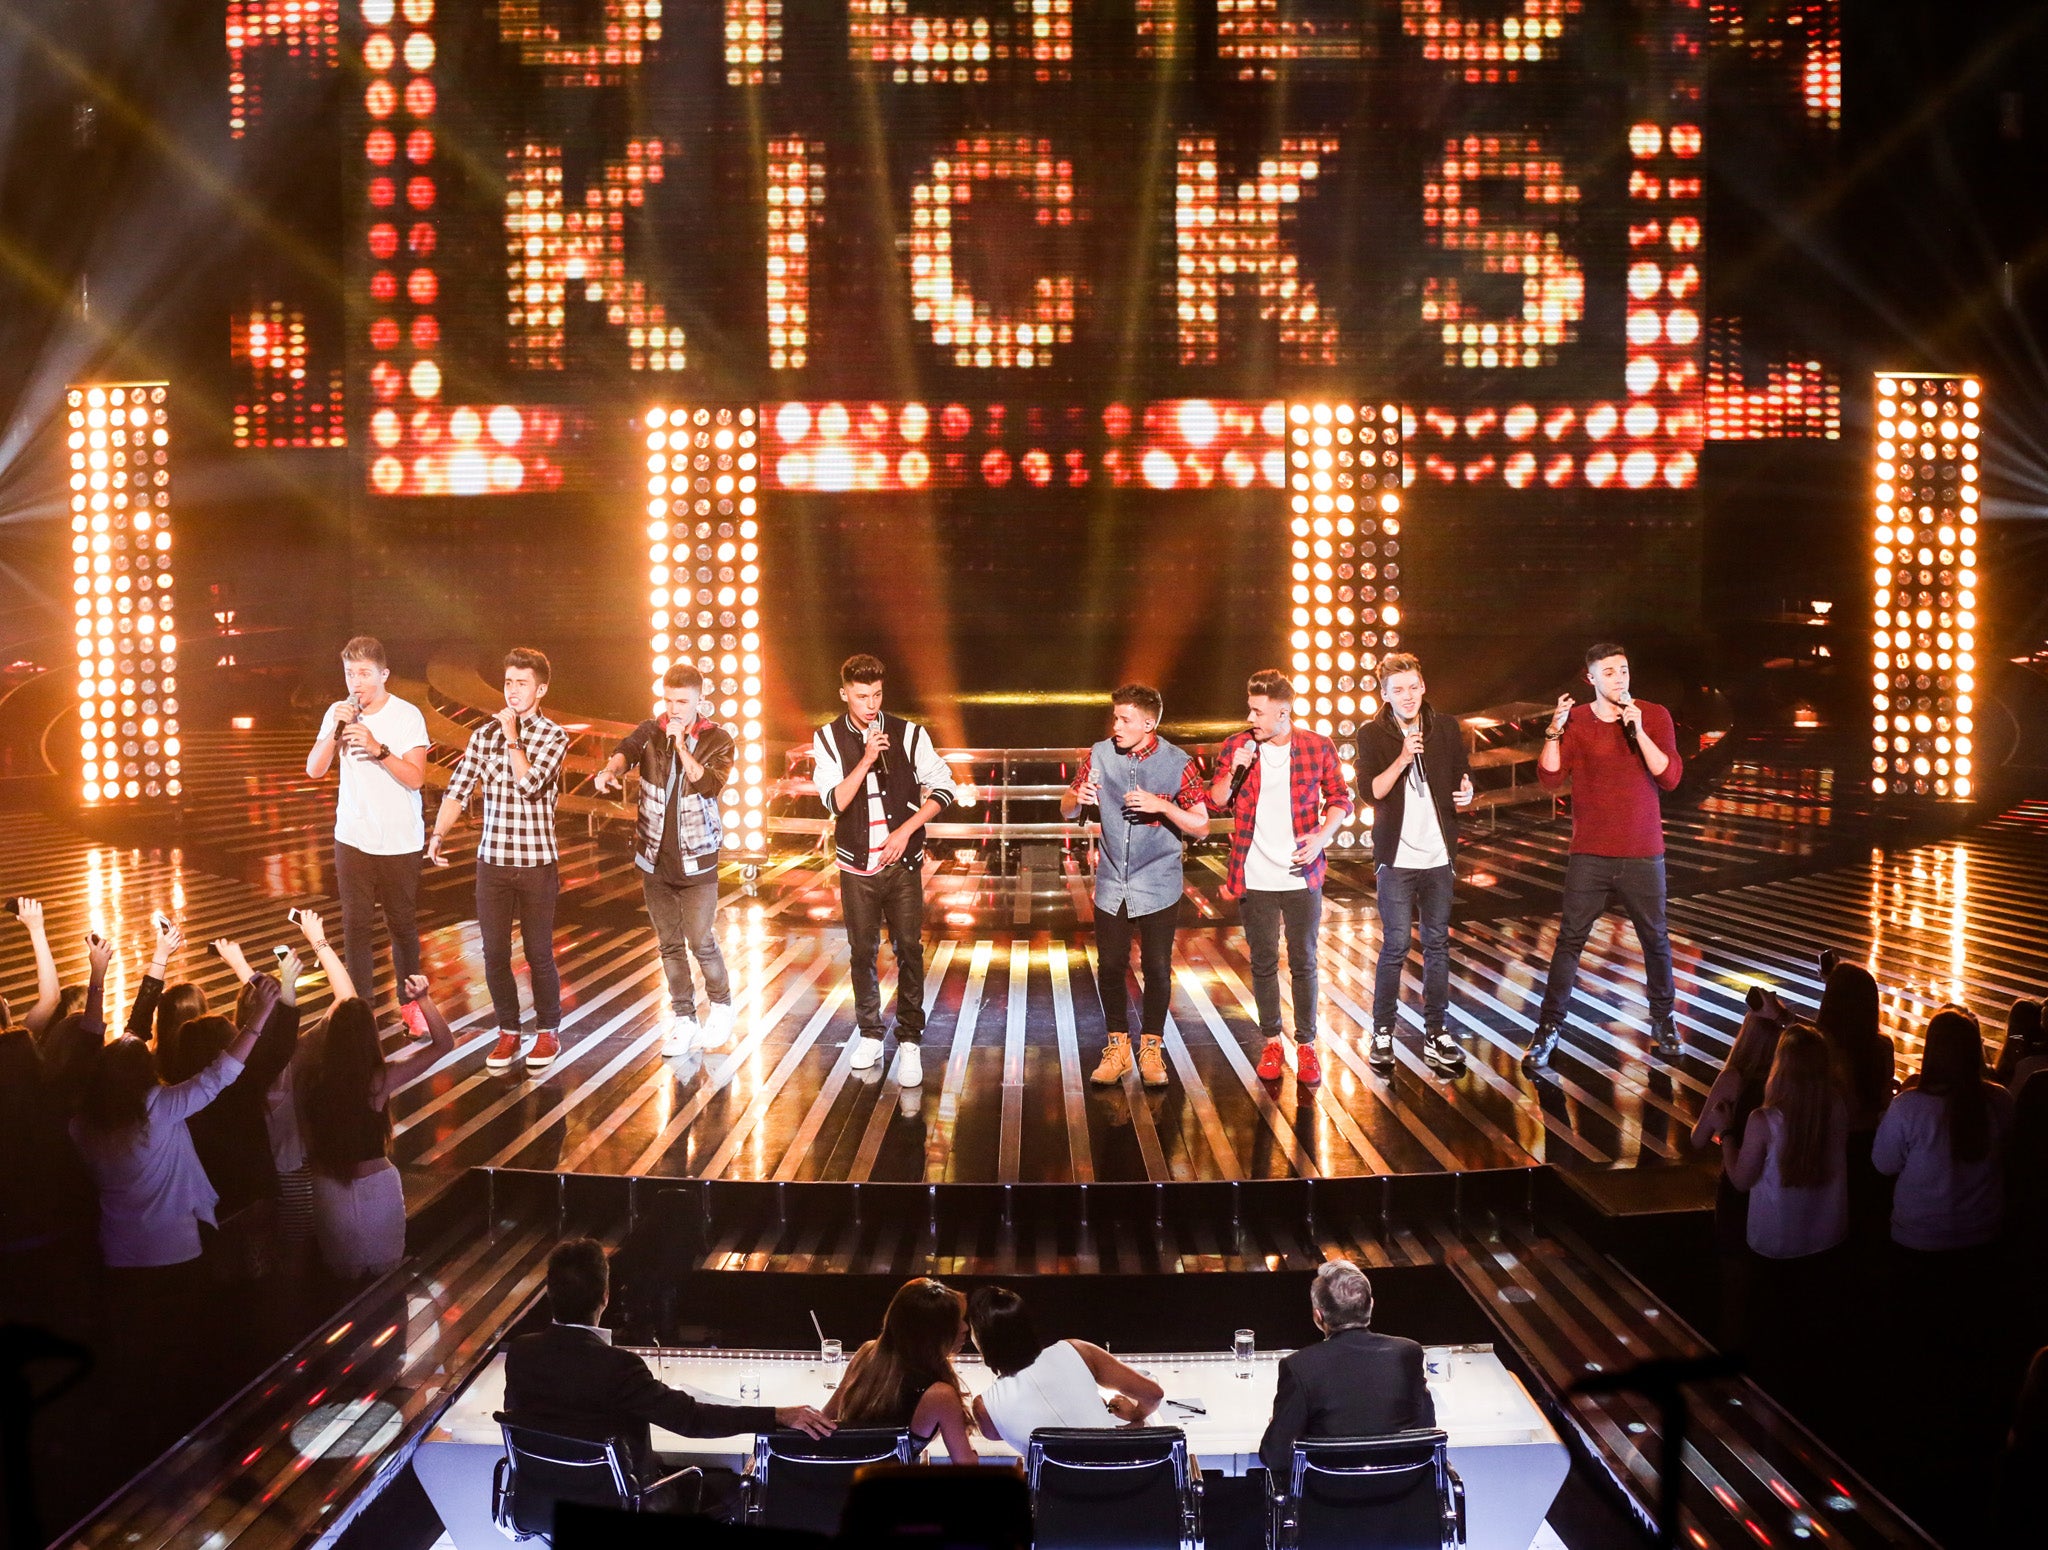 X Factor boy band Stereo Kicks